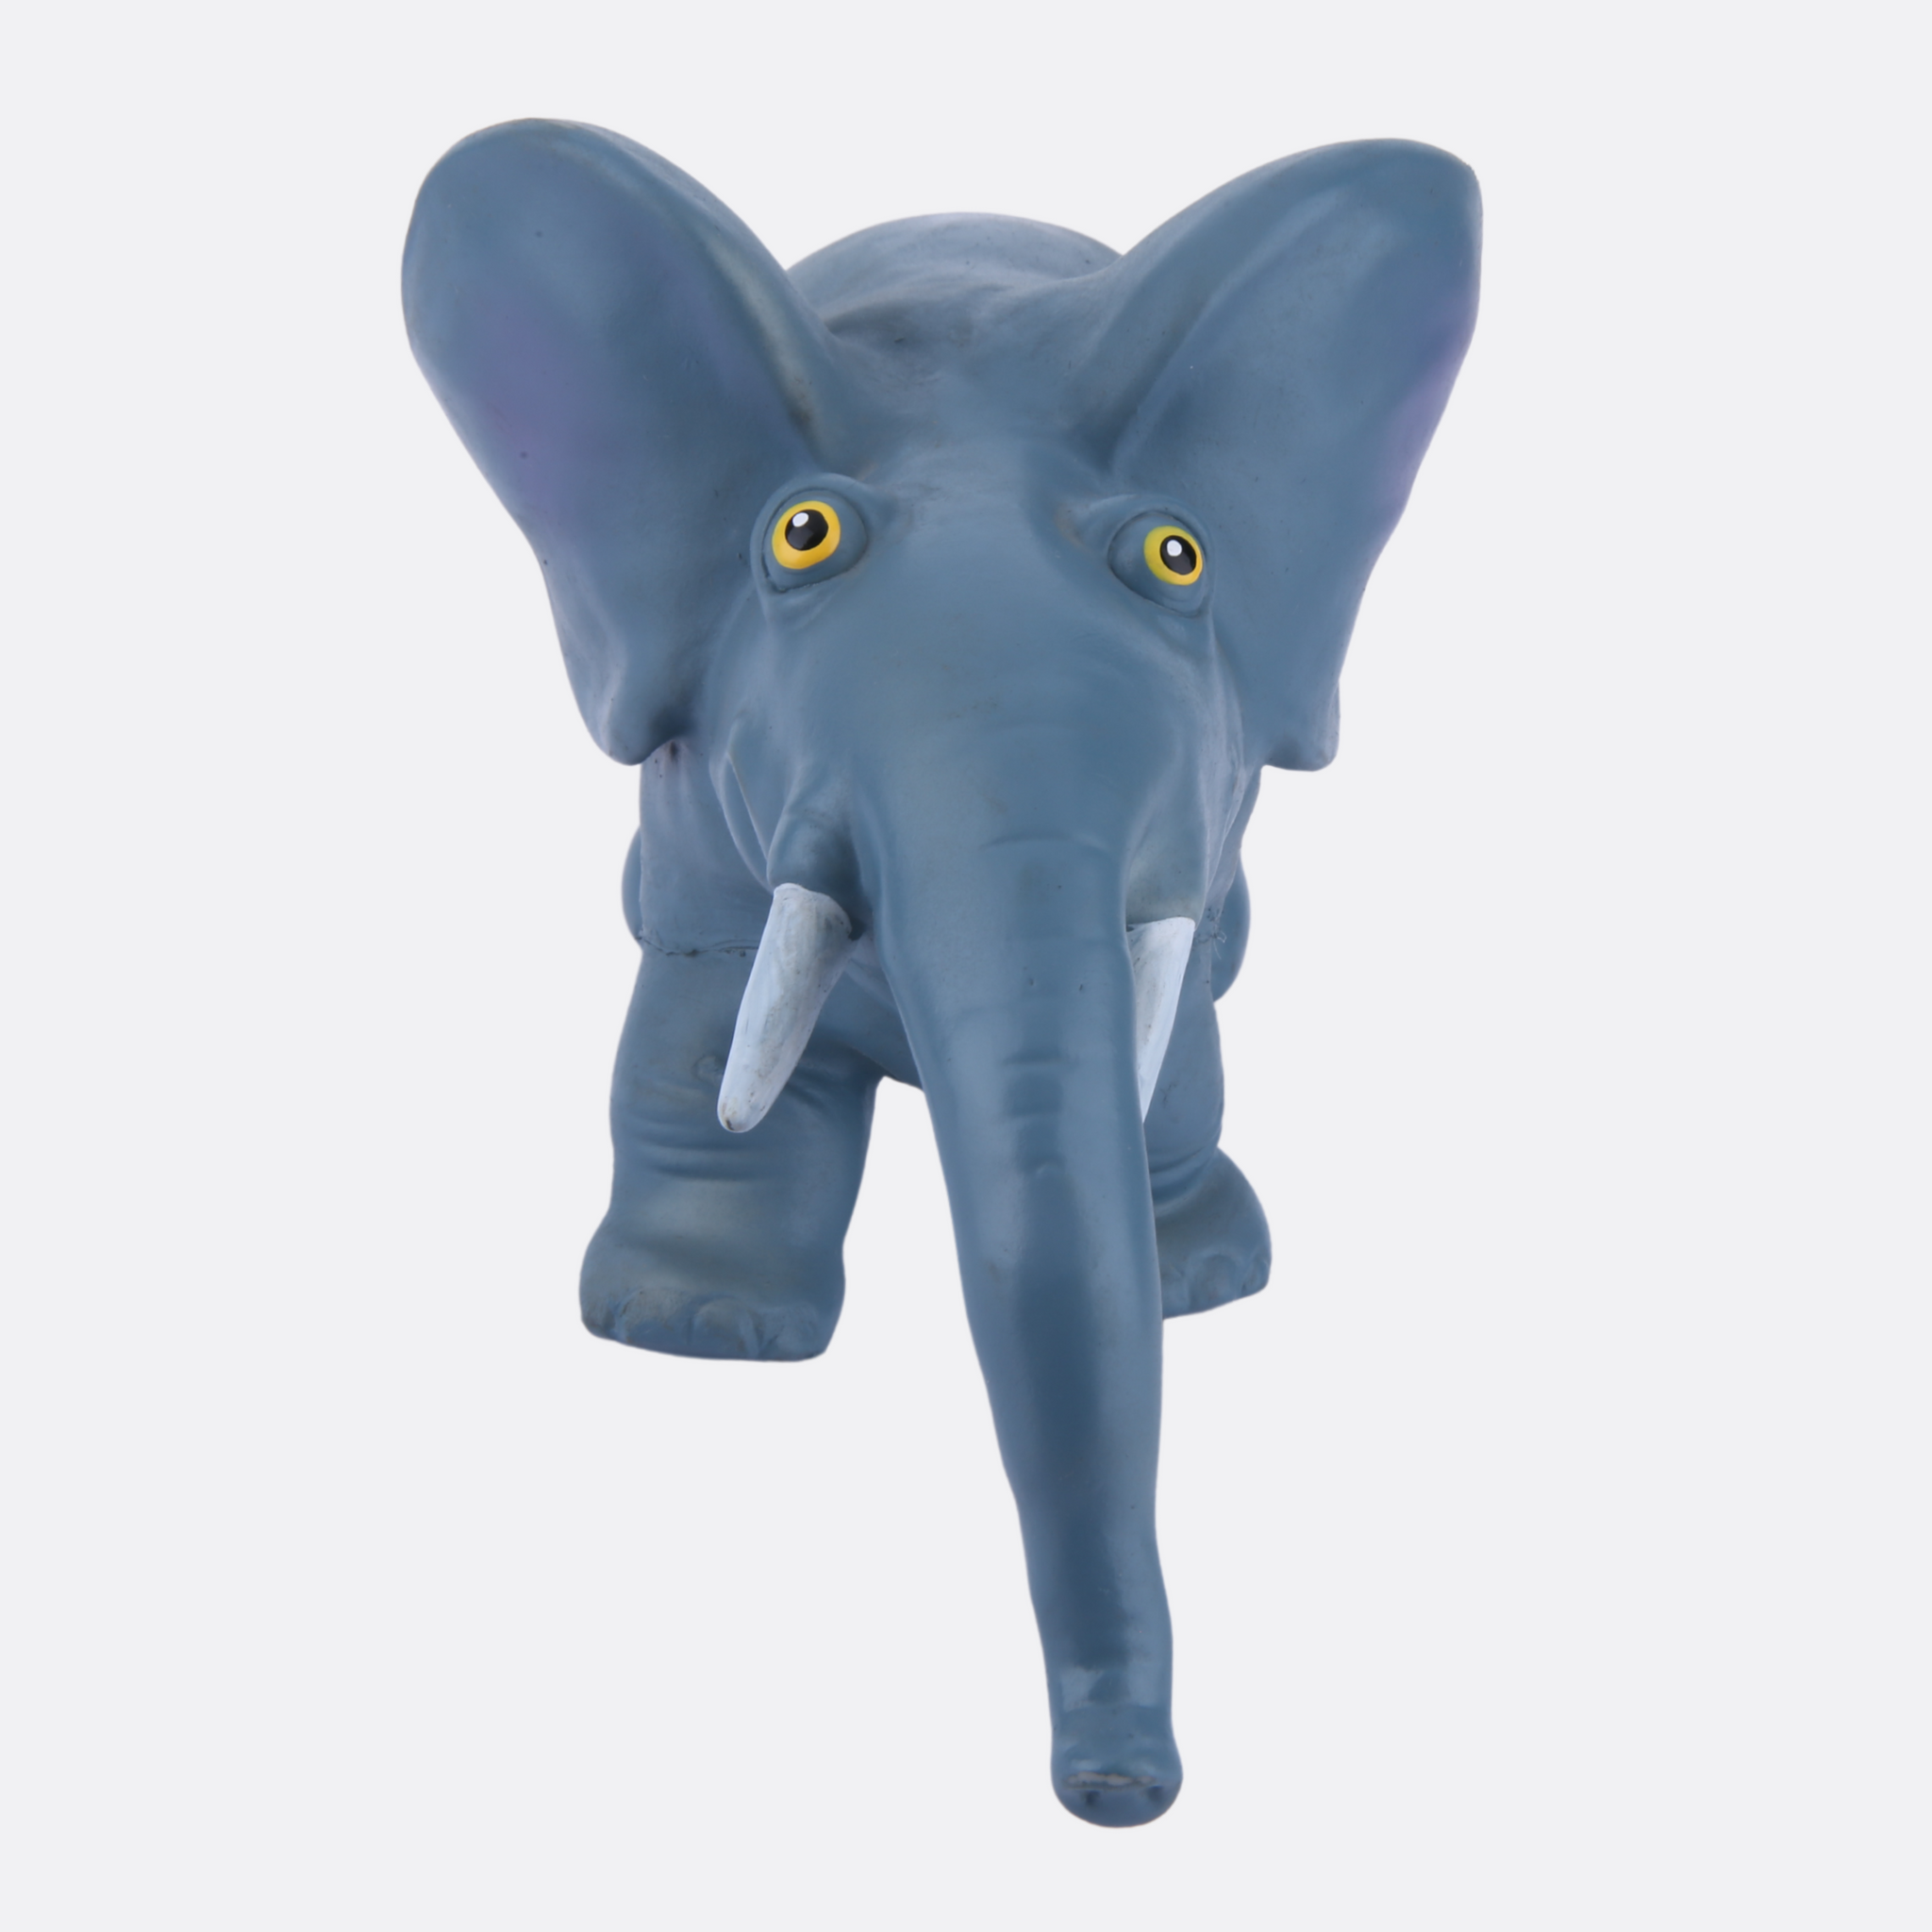 Squishy Elephant toy